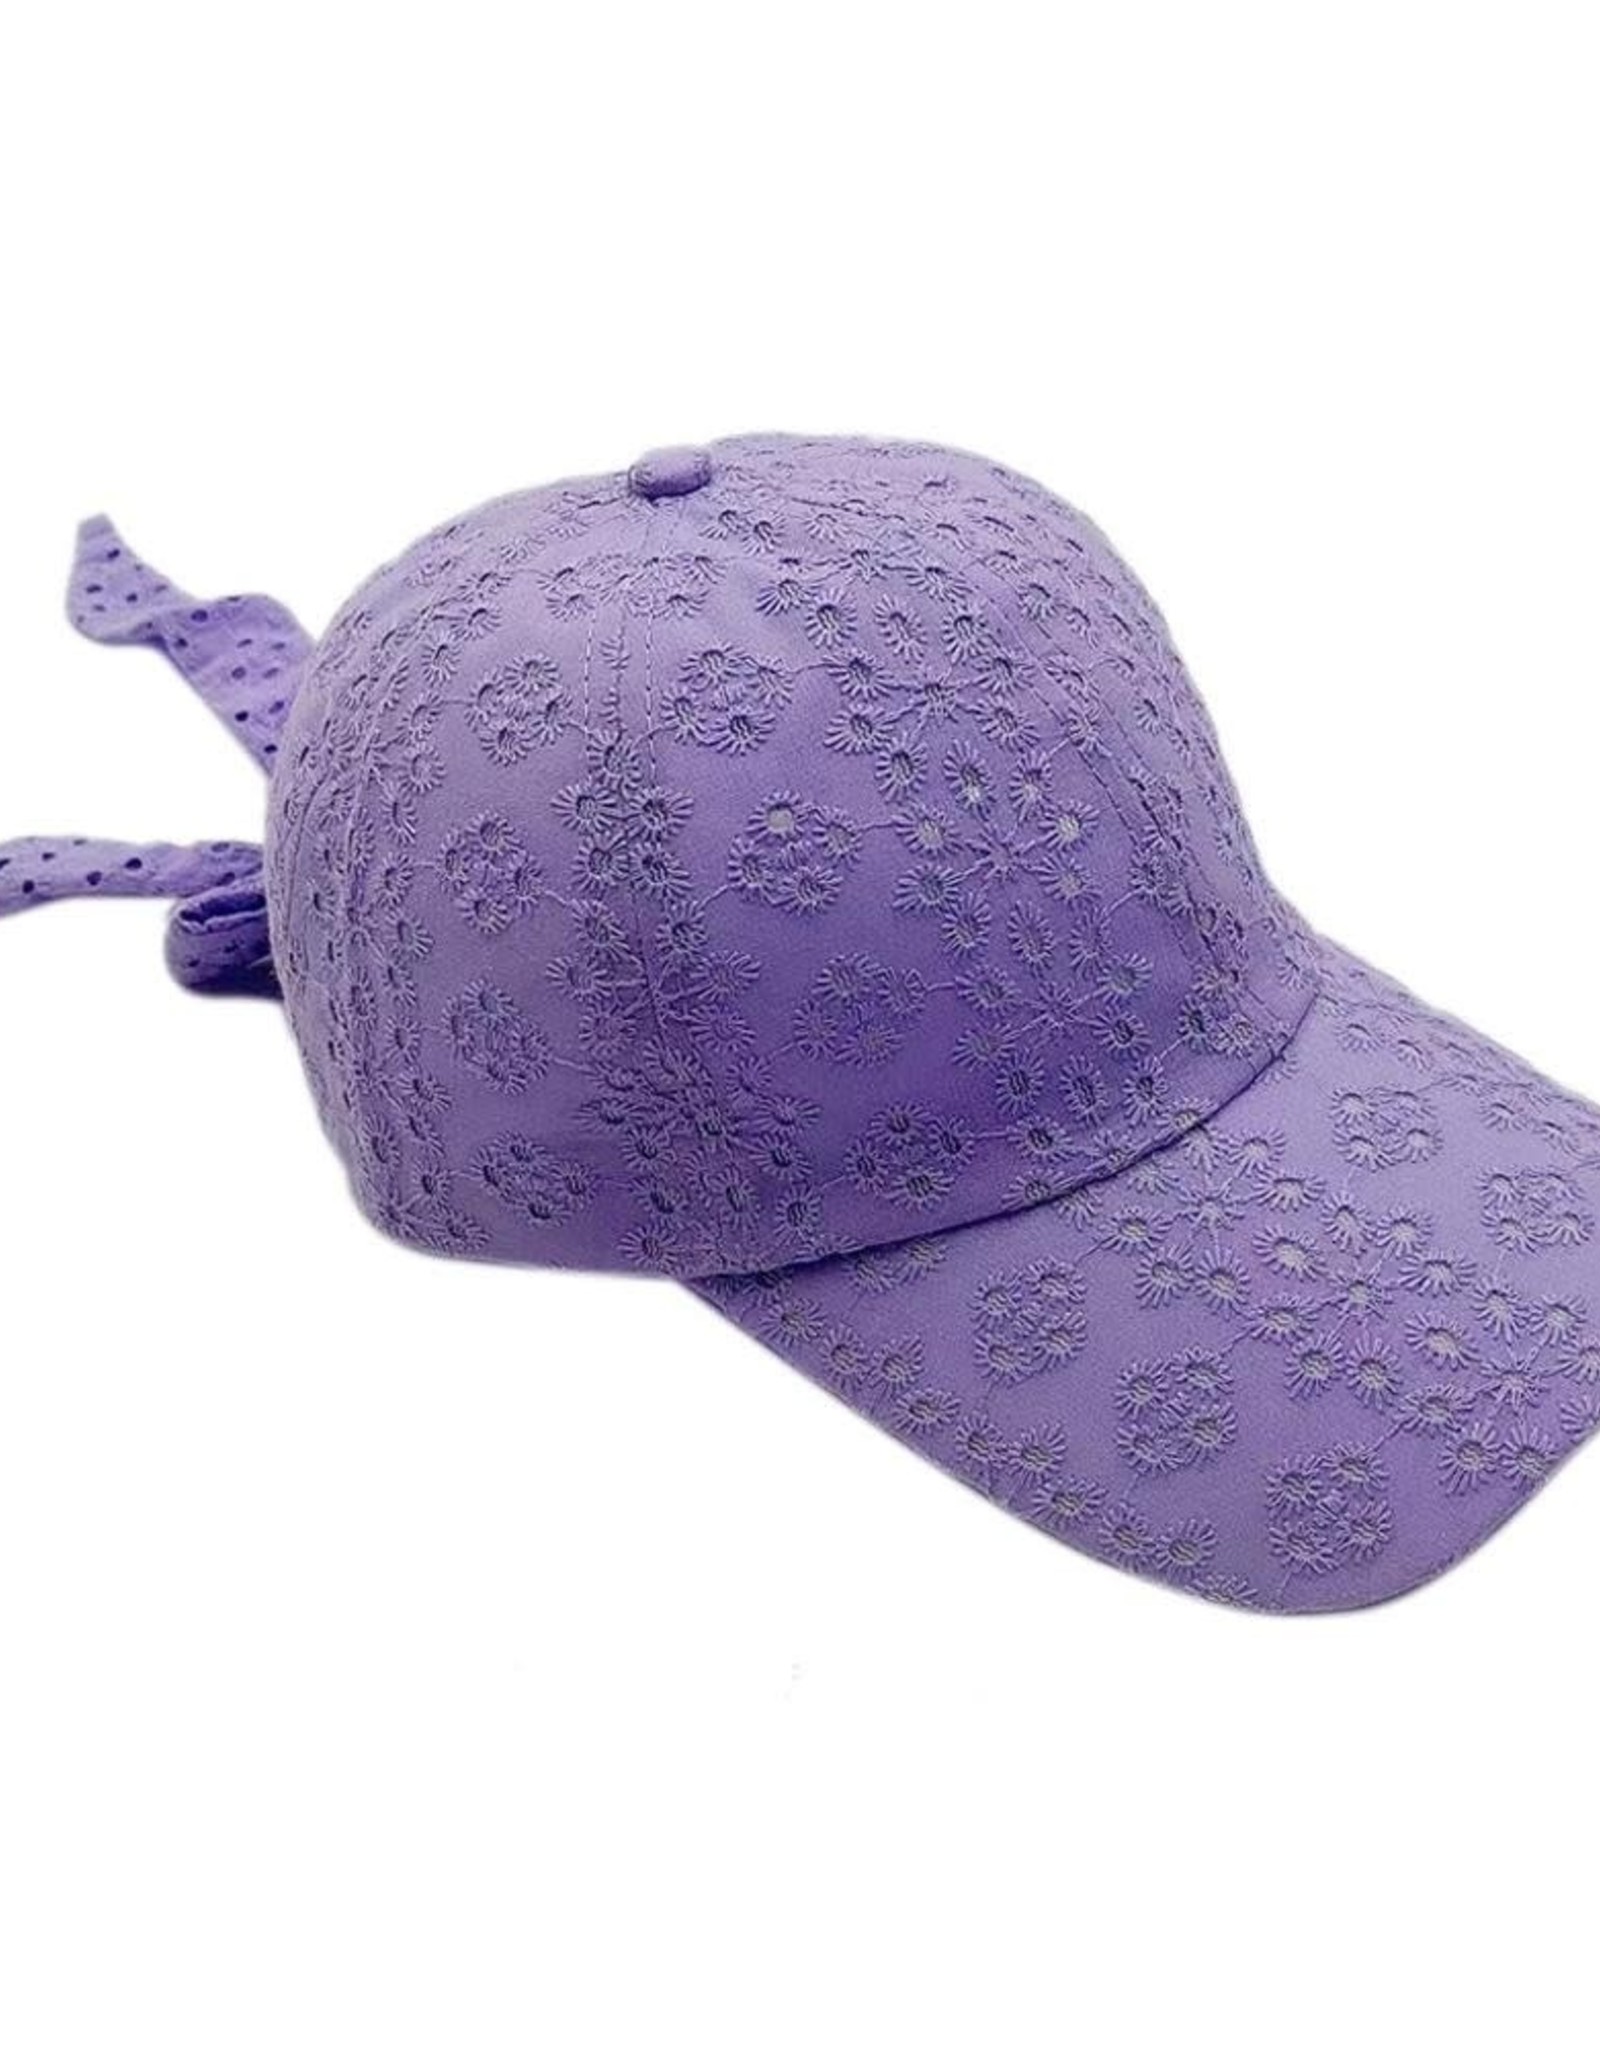 judson 728895 - Floral Eyelet Baseball Cap With Tie - Lavender